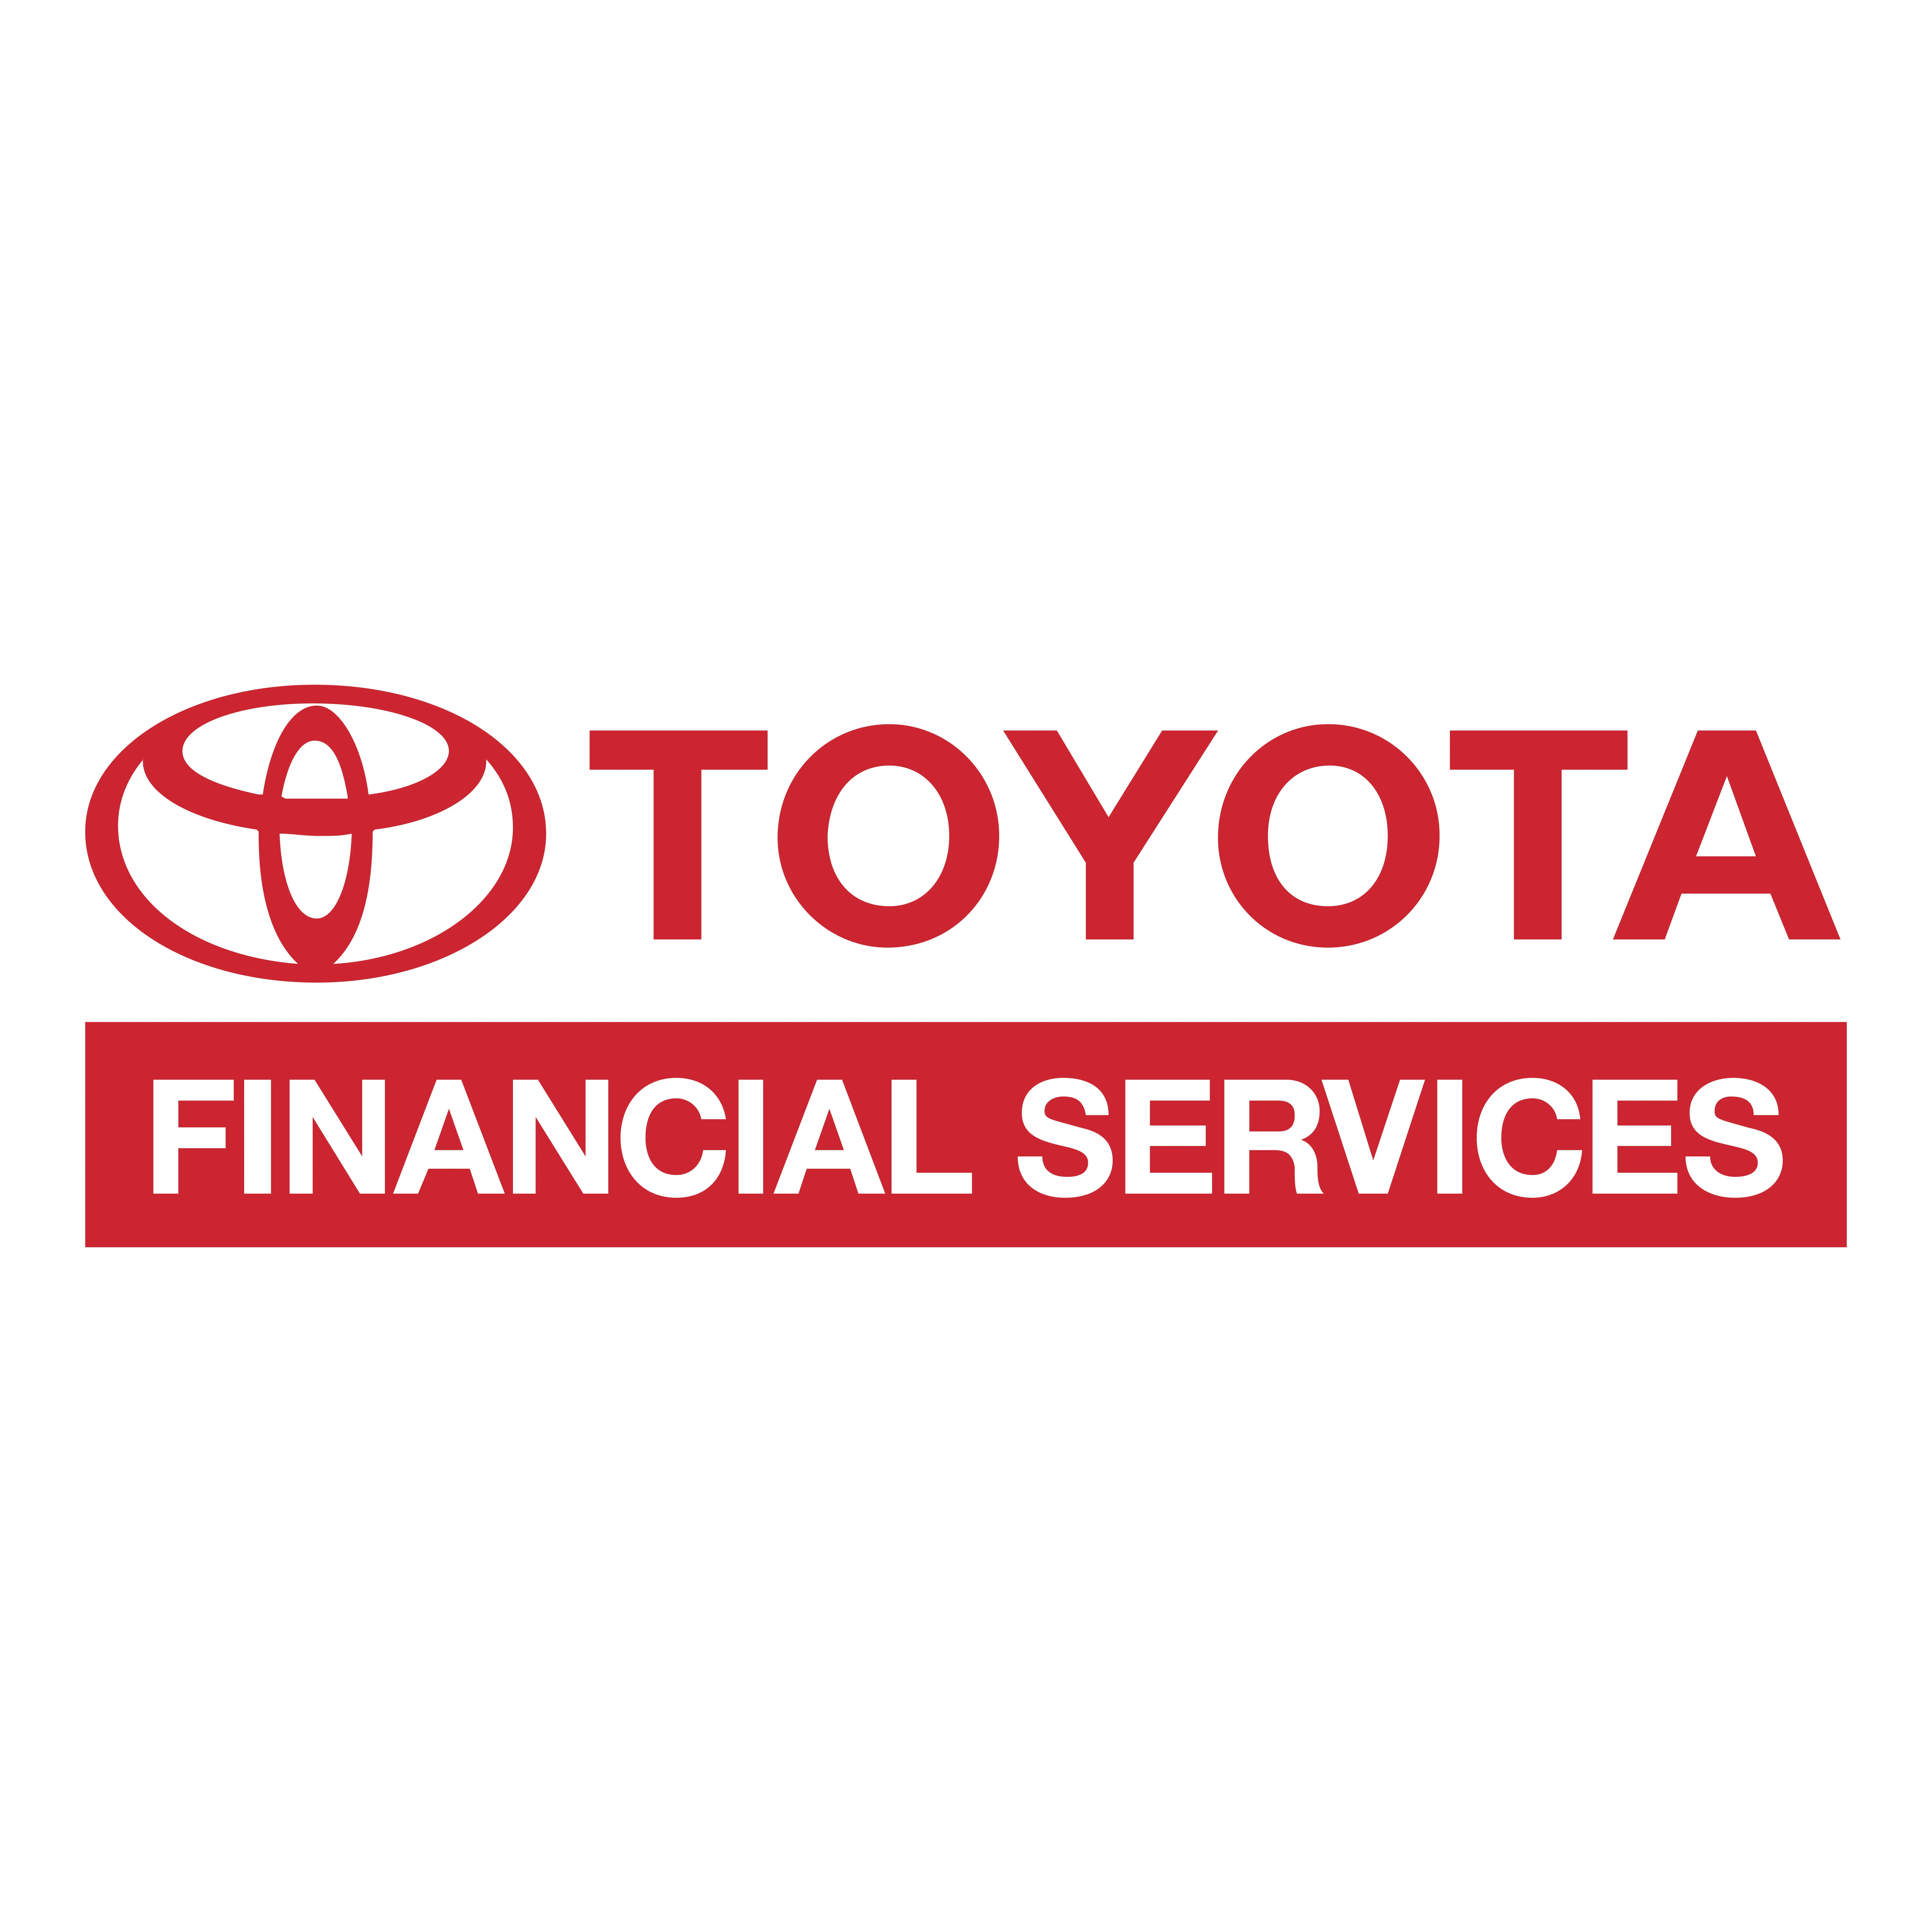 Toyota - Financial Services logo